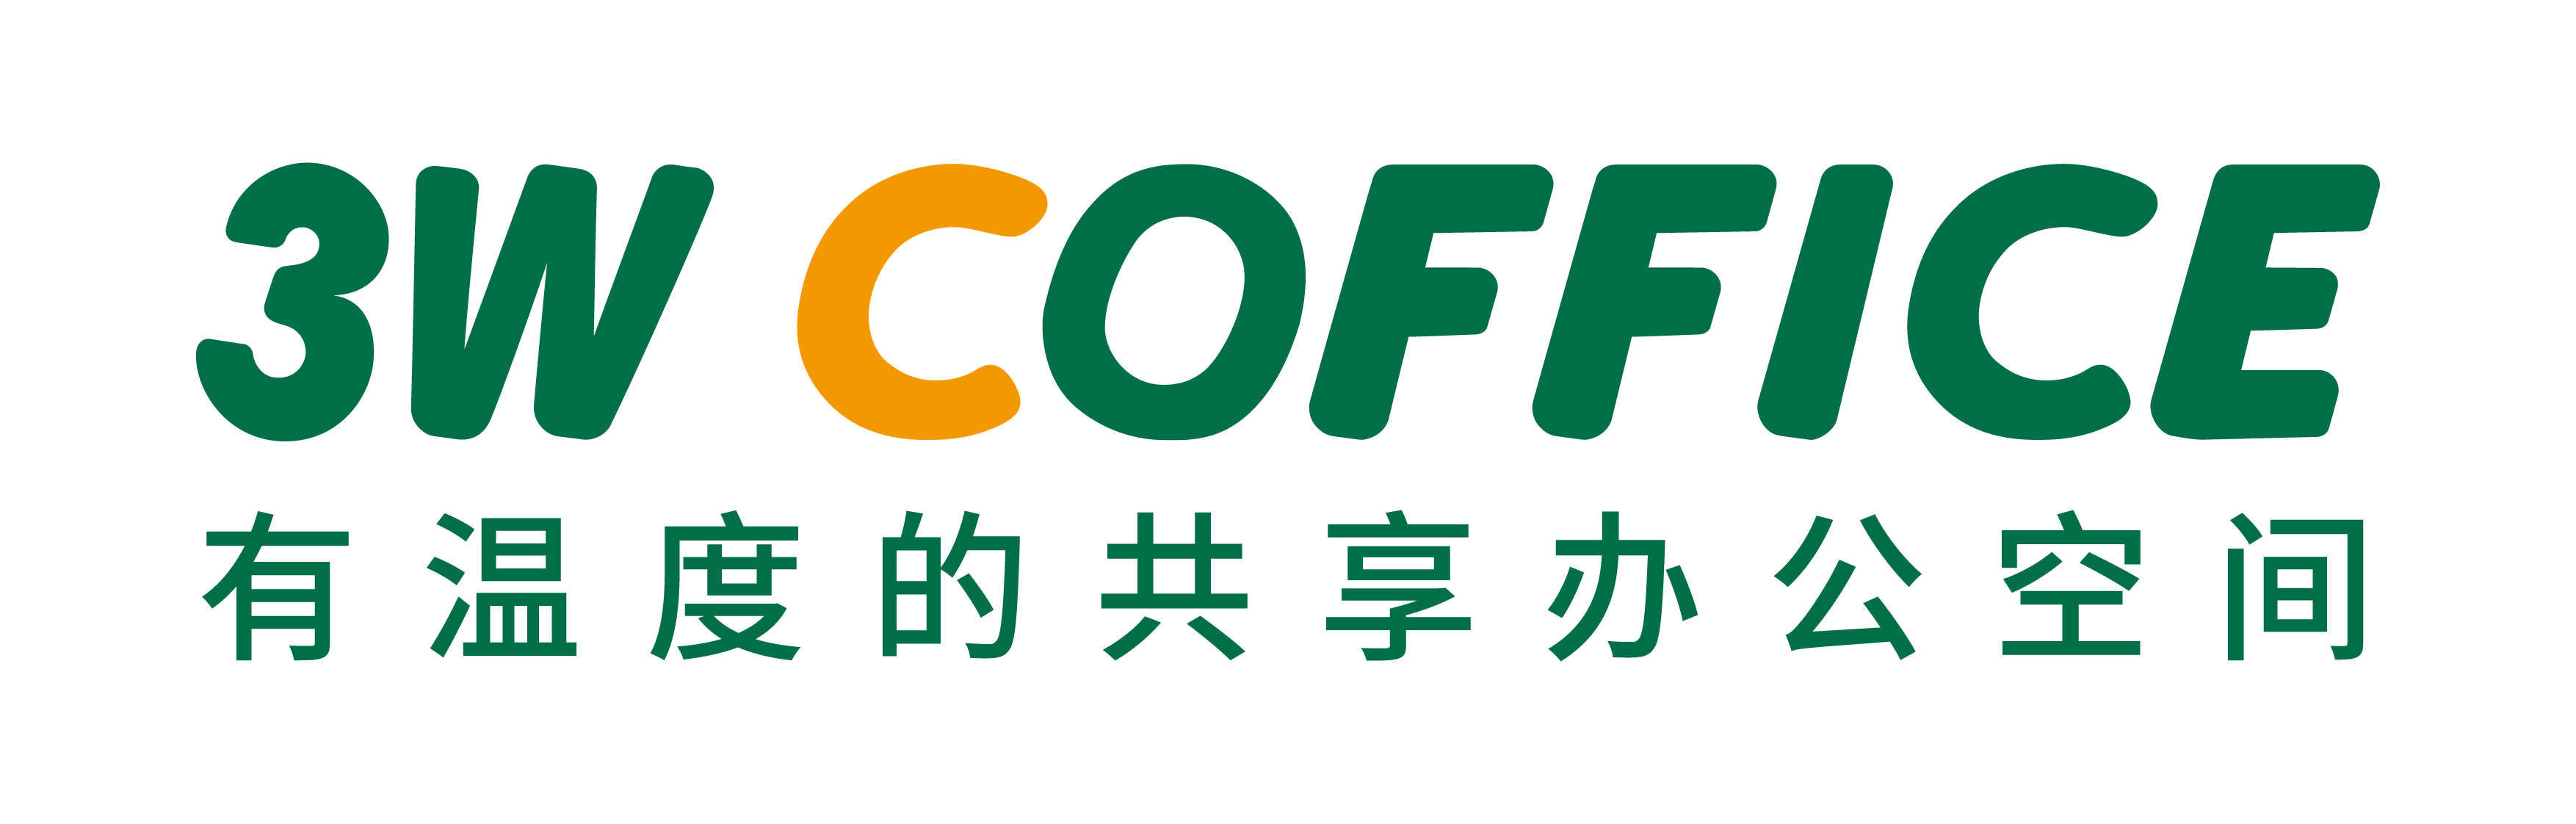 3W COFFICE logo和slogan-01副本.png